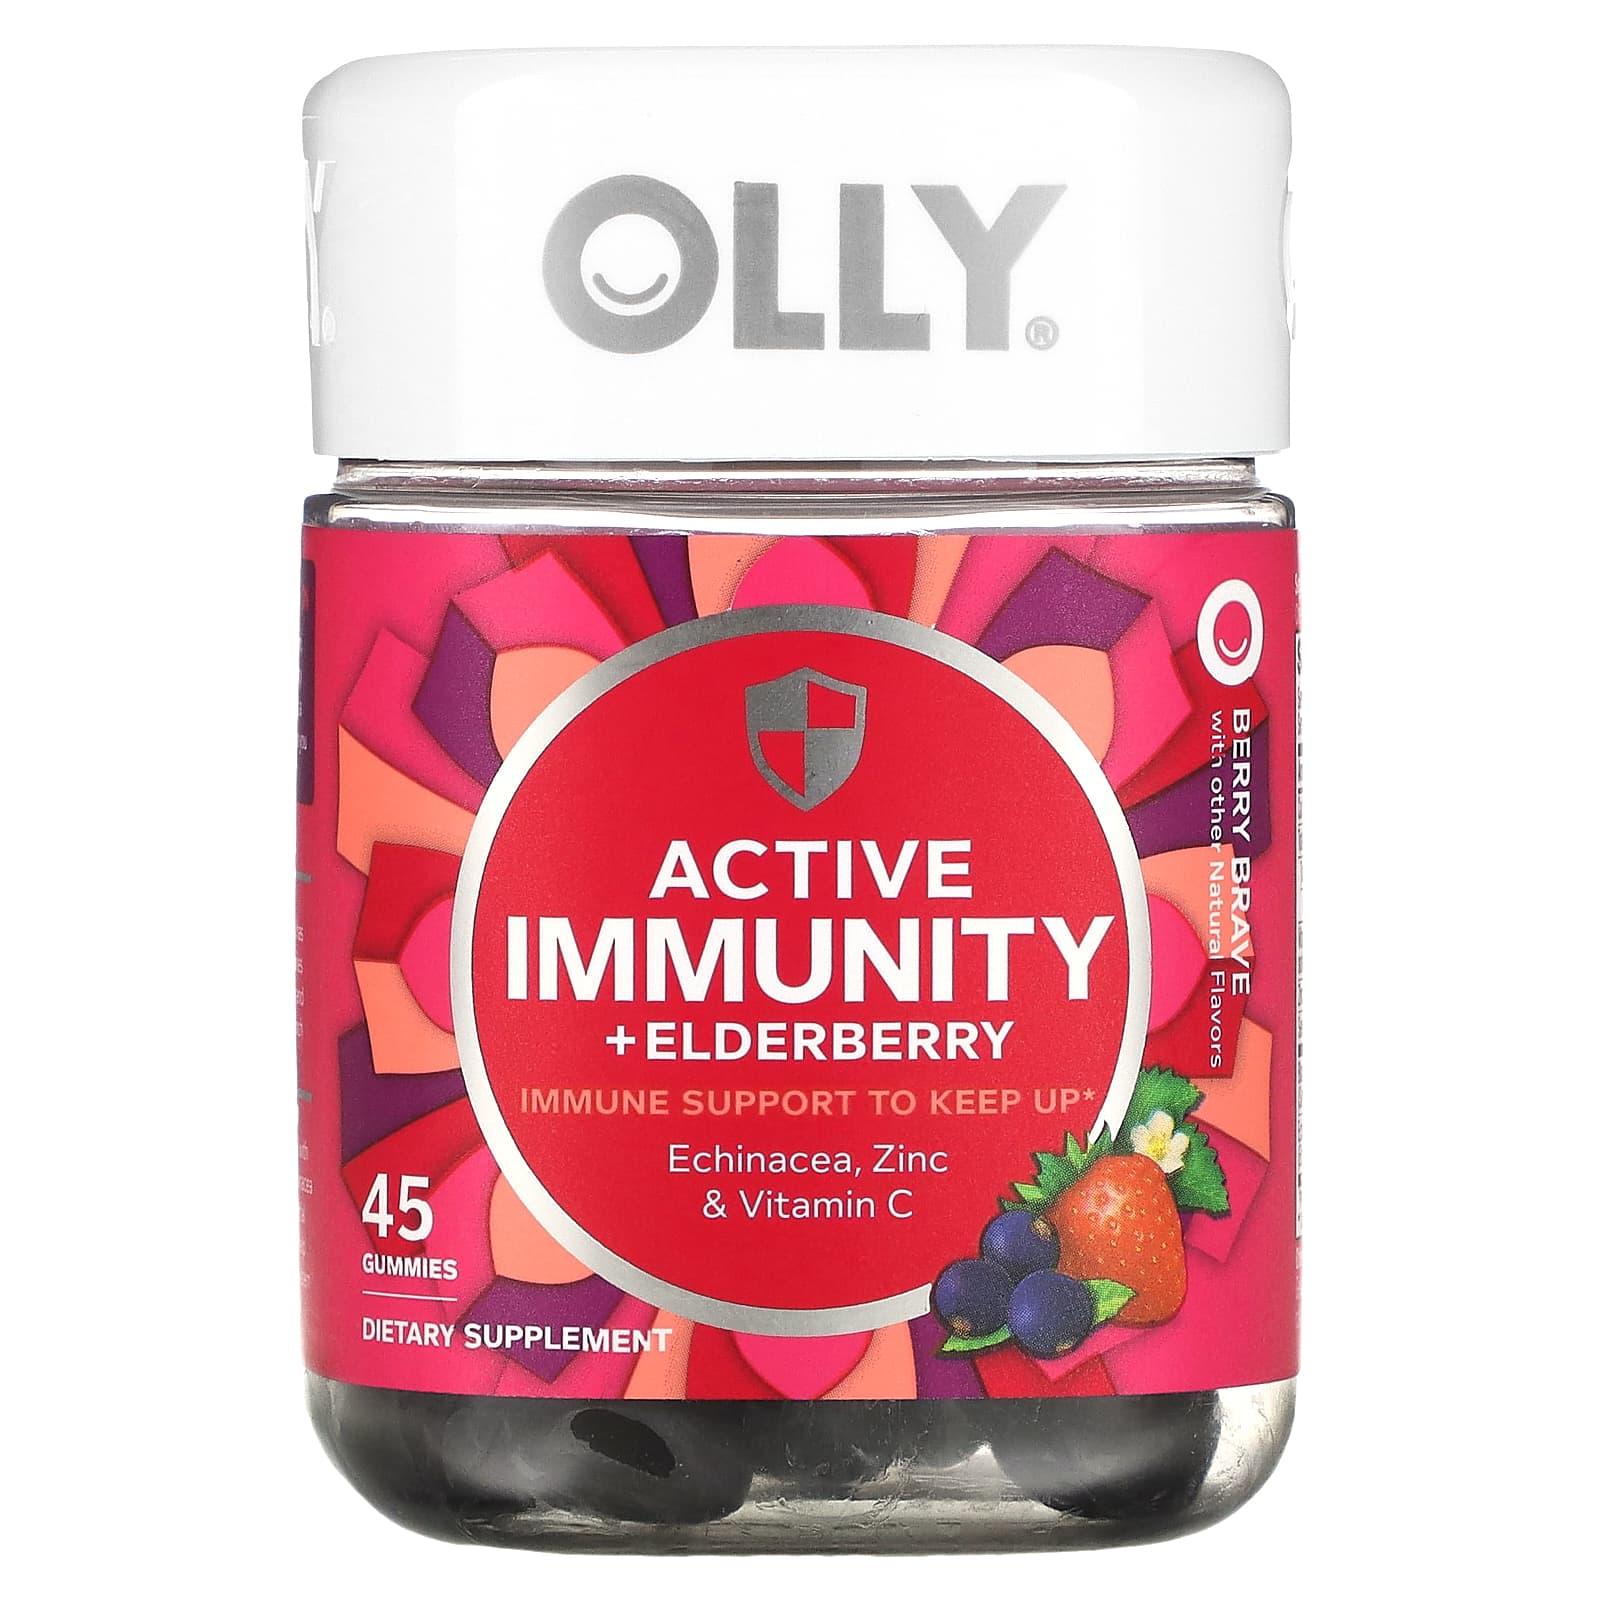 OLLY Adult Multi + Probiotic, Tropical Twist, 70 Gummies